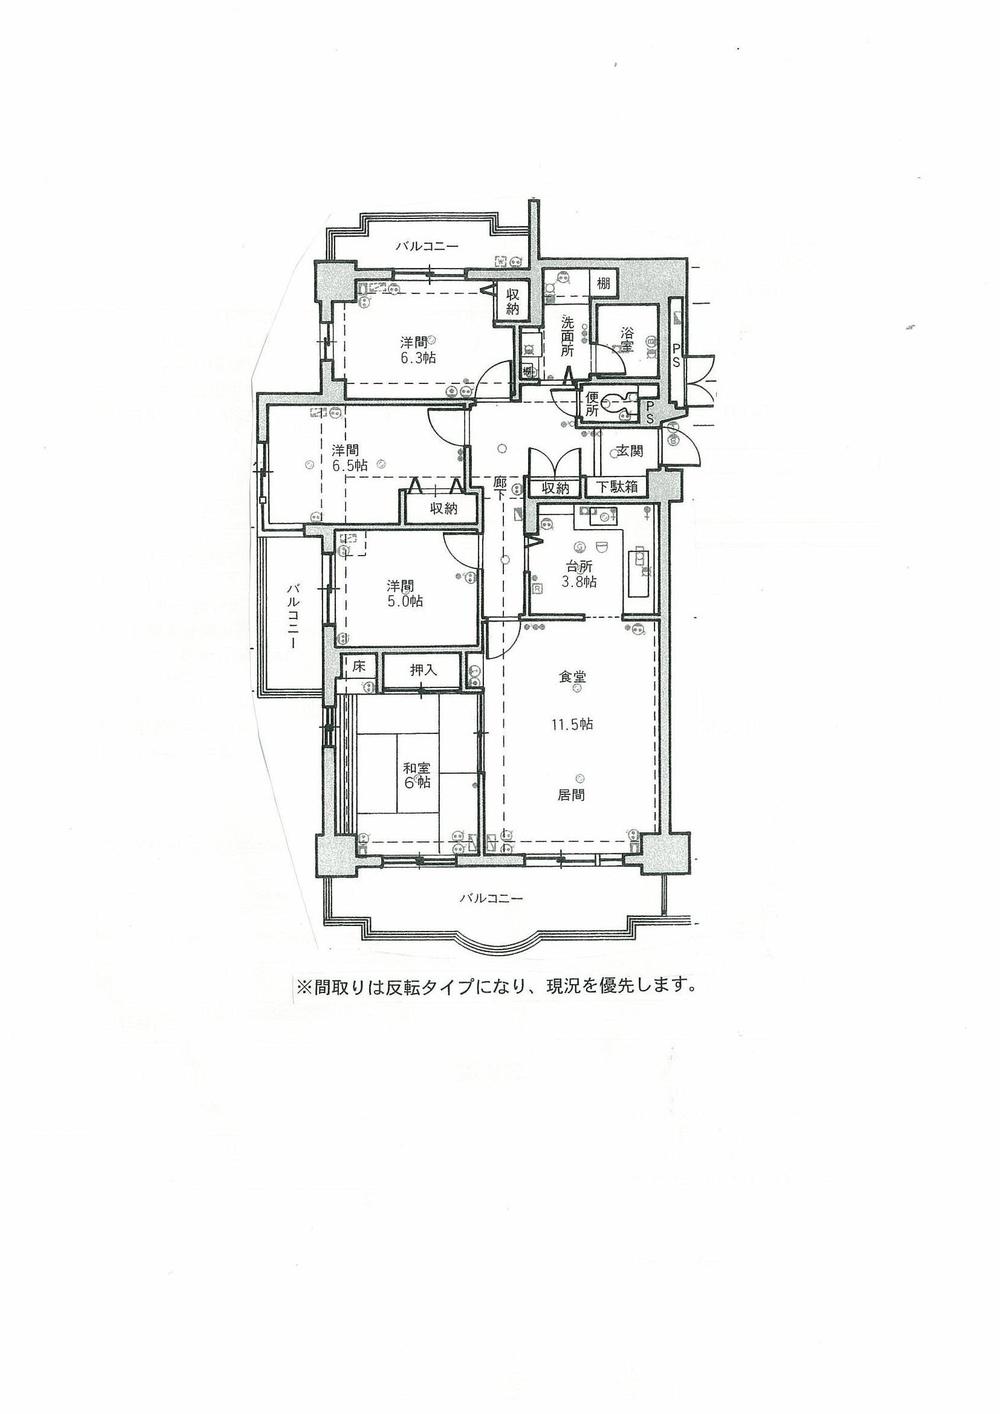 Floor plan. 4LDK, Price 15.8 million yen, Footprint 94 sq m , Balcony area 20.19 sq m inverted type. It is beautiful to your.